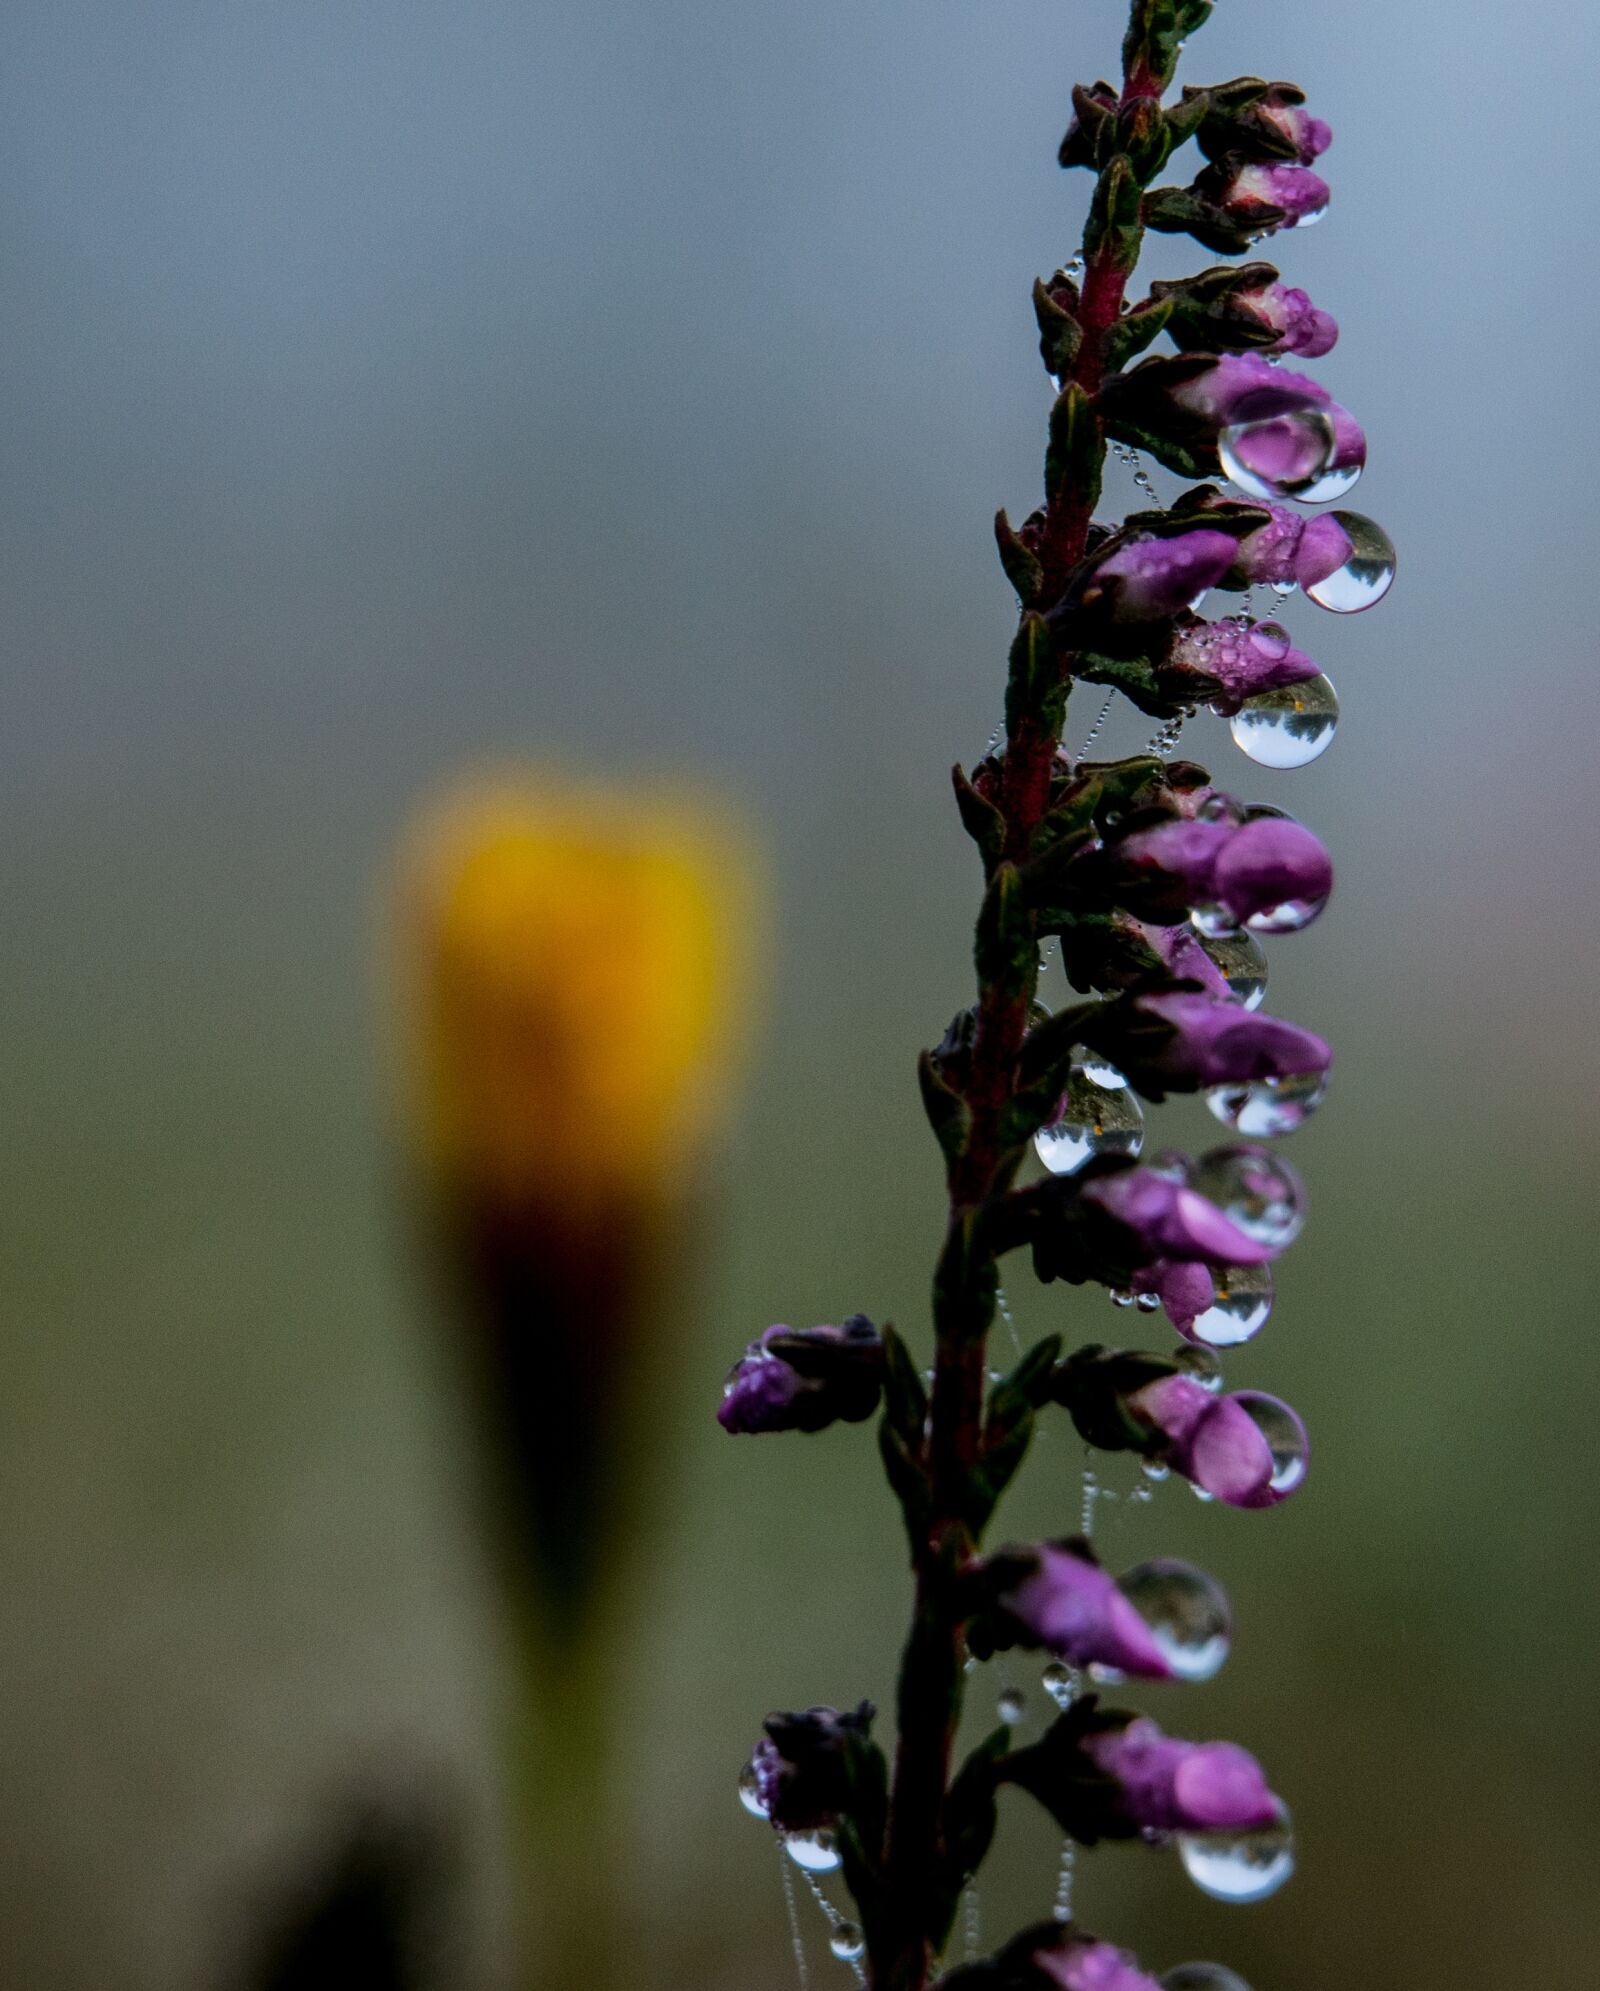 Nikon 1 J5 sample photo. Flower, plant, nature photography